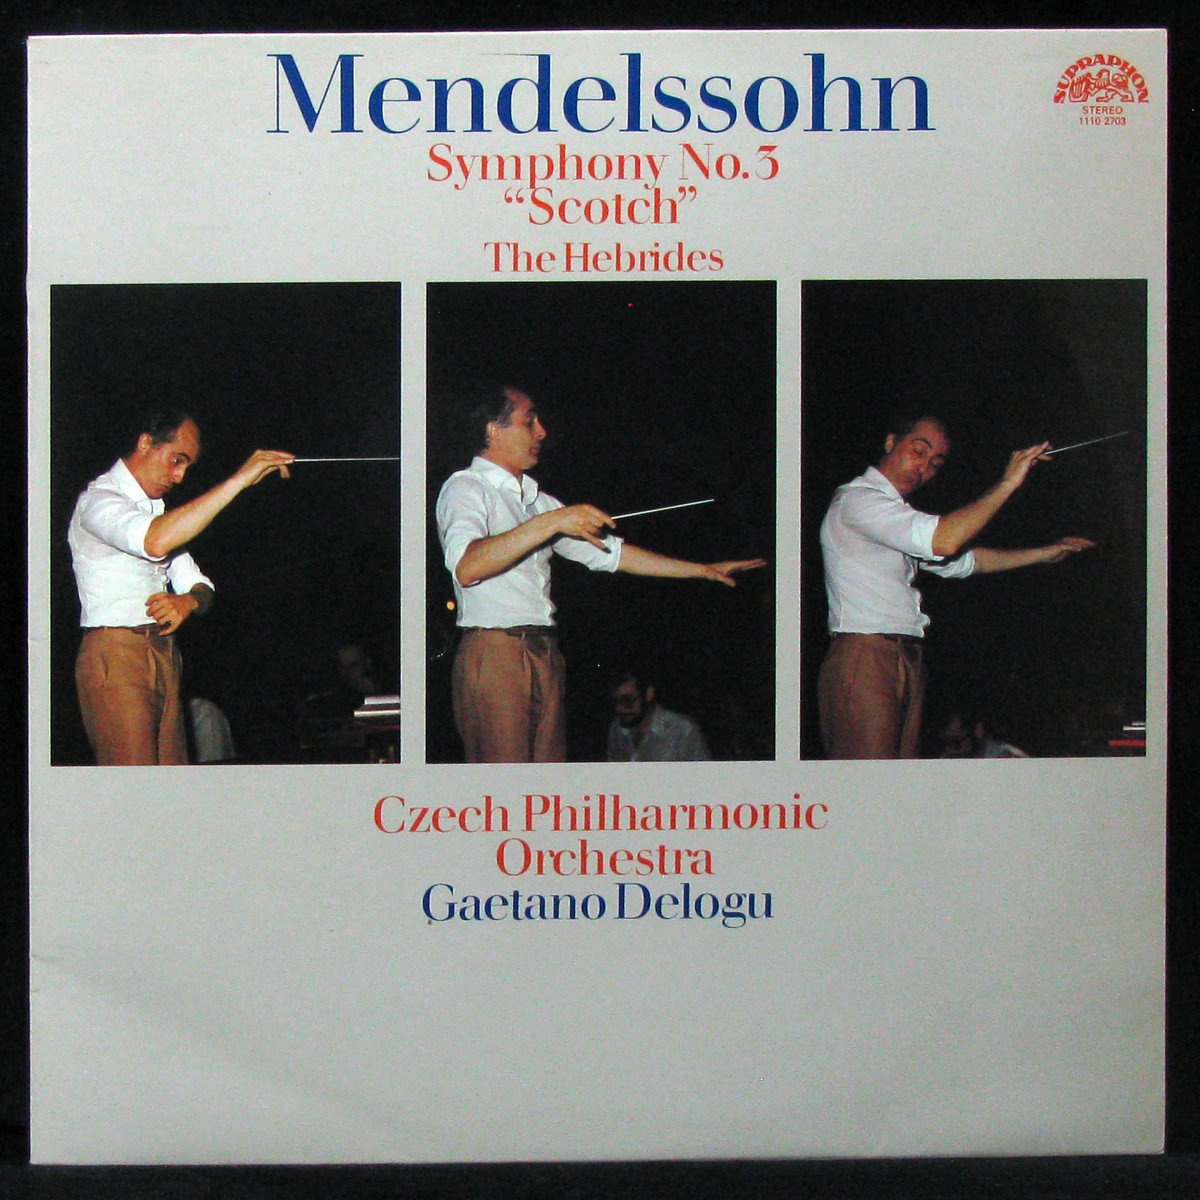 Mendelssohn: Symphony No. 3 'Scotch' / The Hebrides